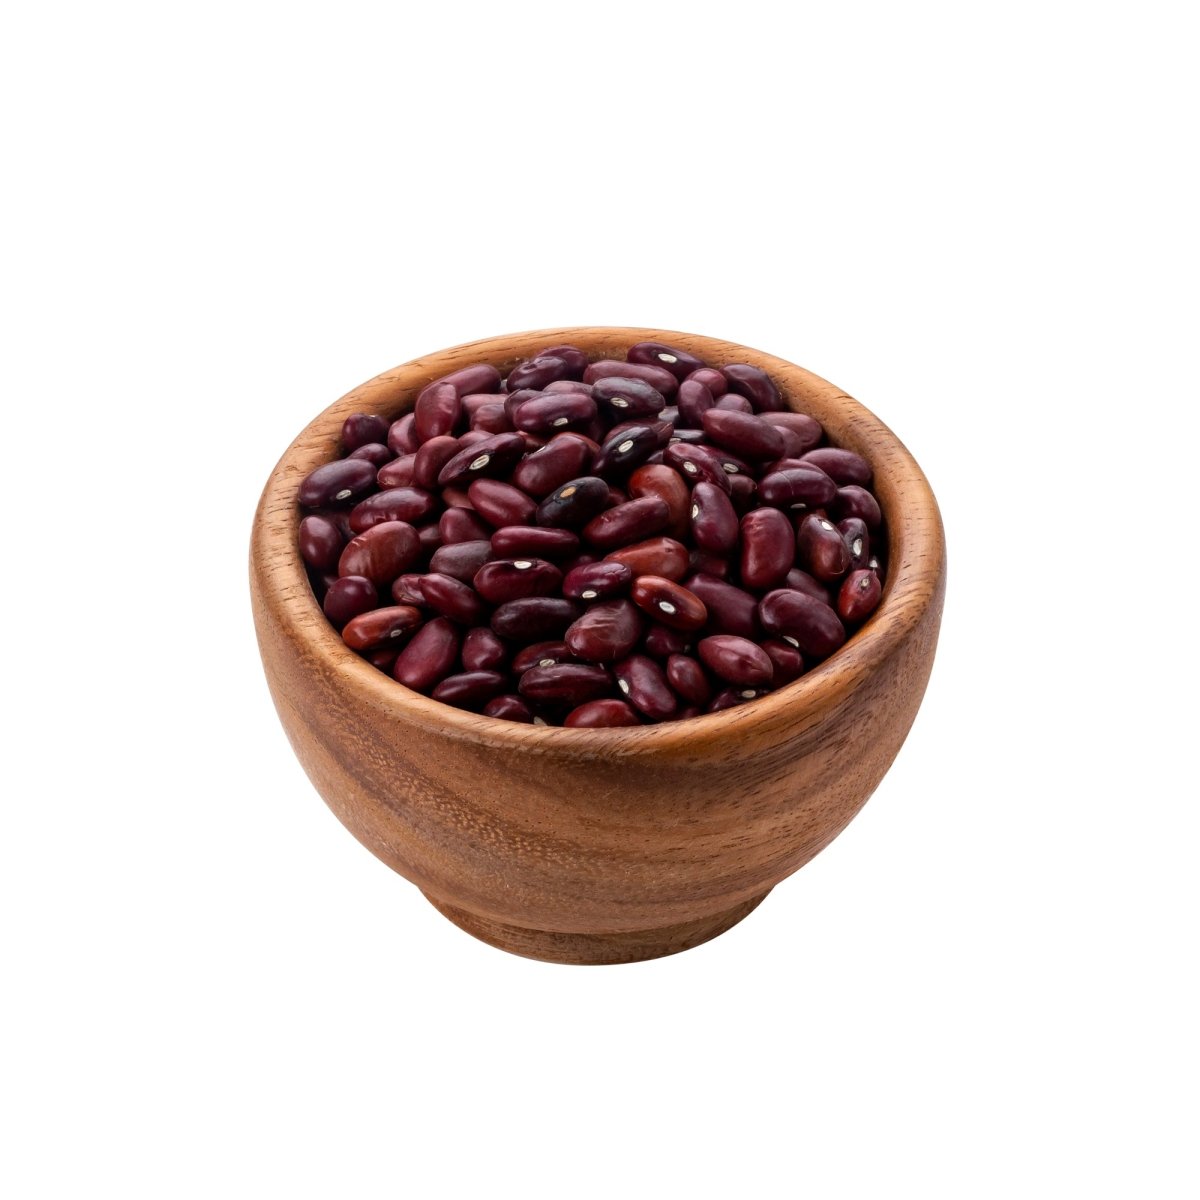 Small Red Kidney Beans / Small Rajma - Tulsidas